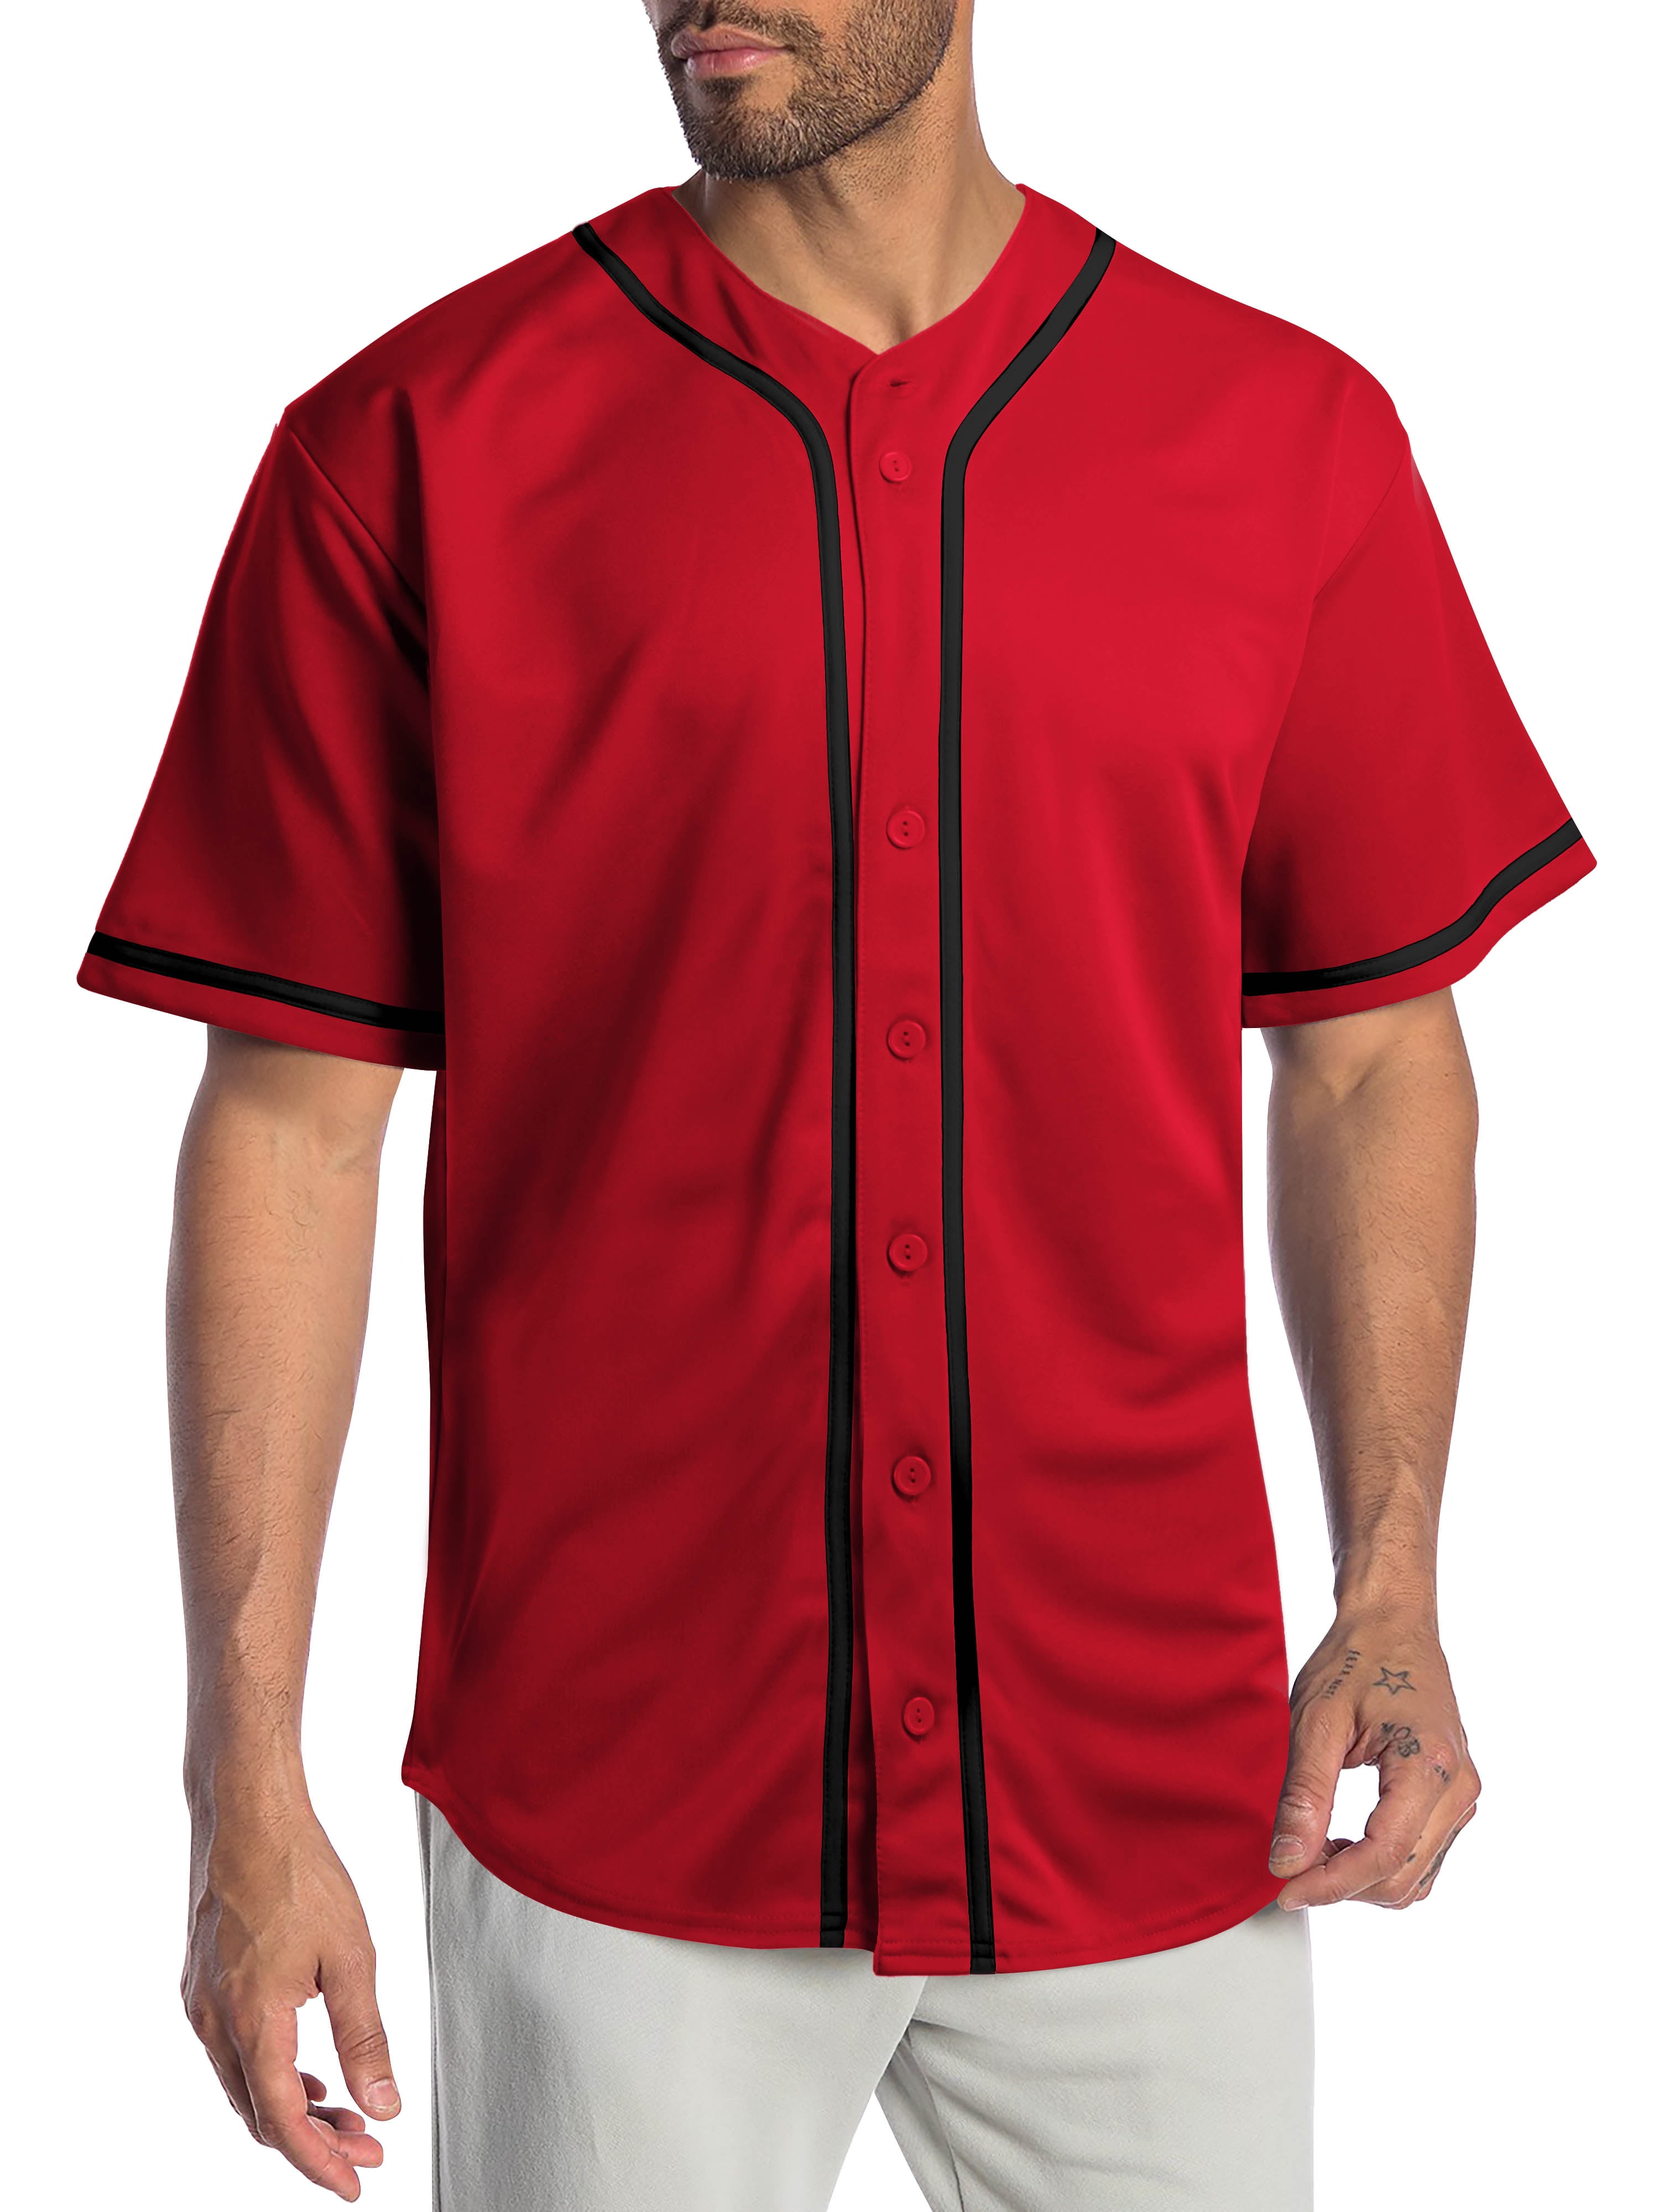 Ma Croix Made in USA Mens Premium Button Down Baseball Jersey Team Uniform Hip Hop Urban Tee Shirt 